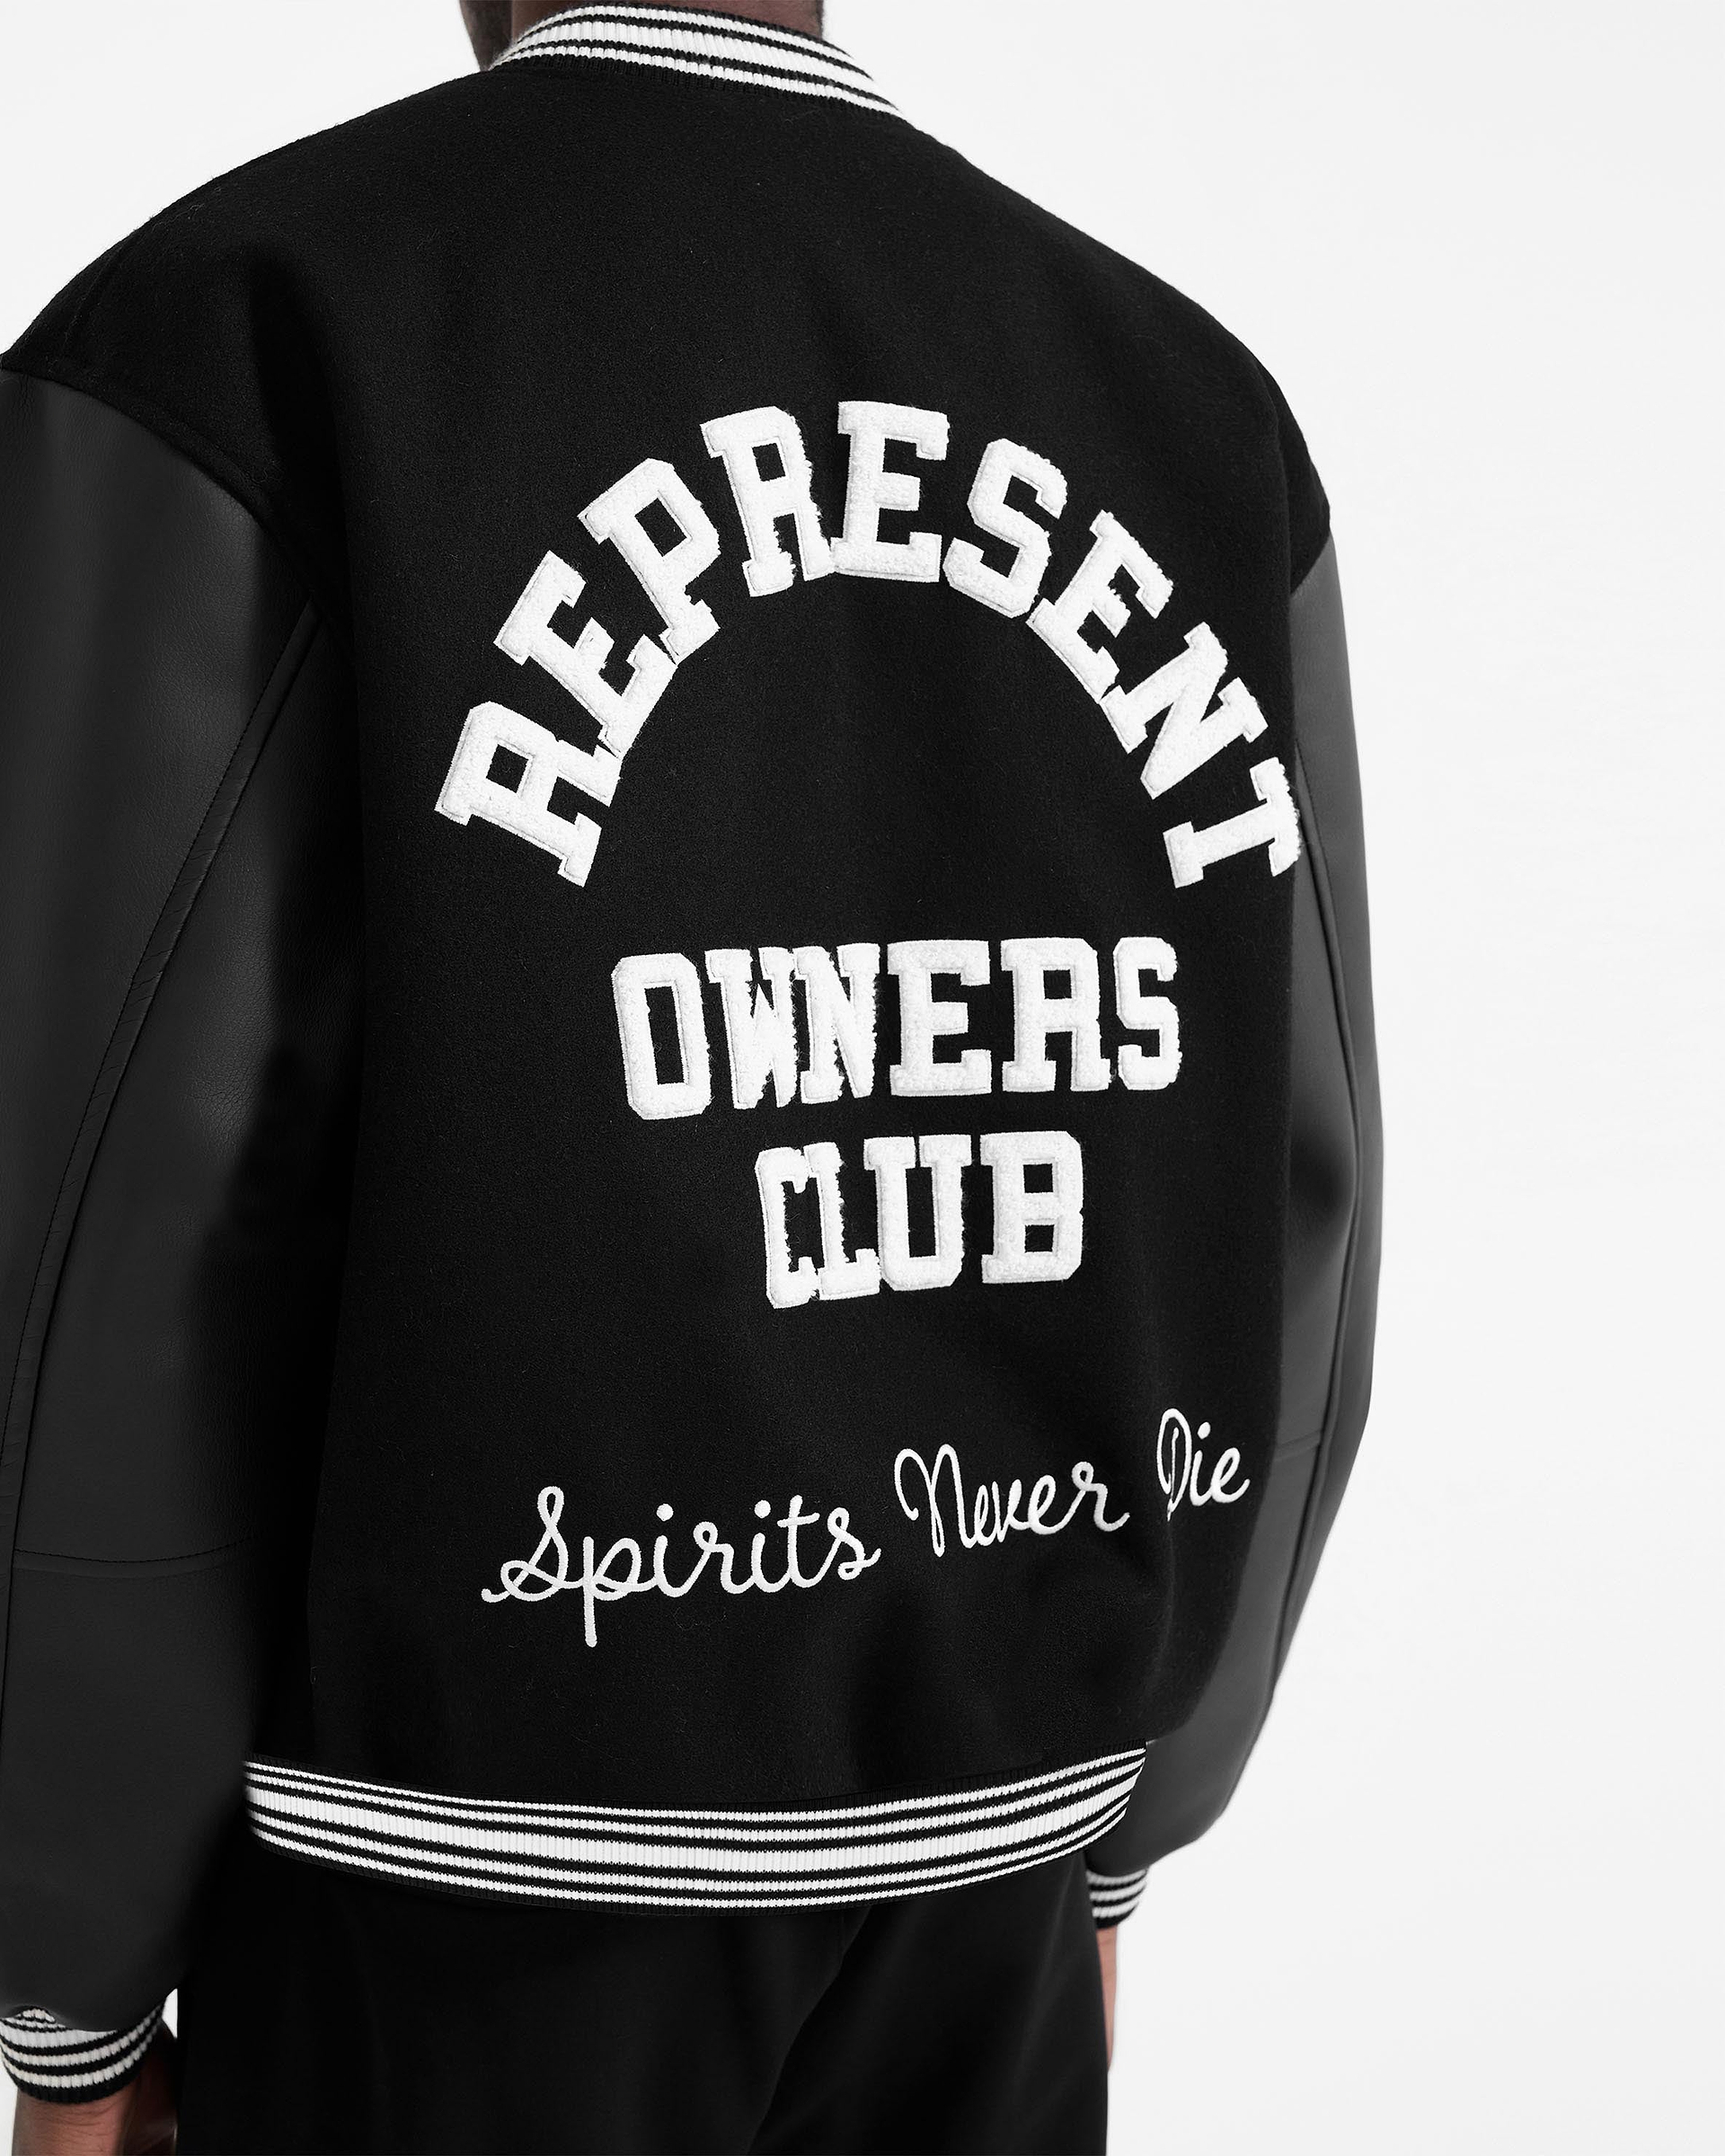 Members Club Applique Varsity Jacket